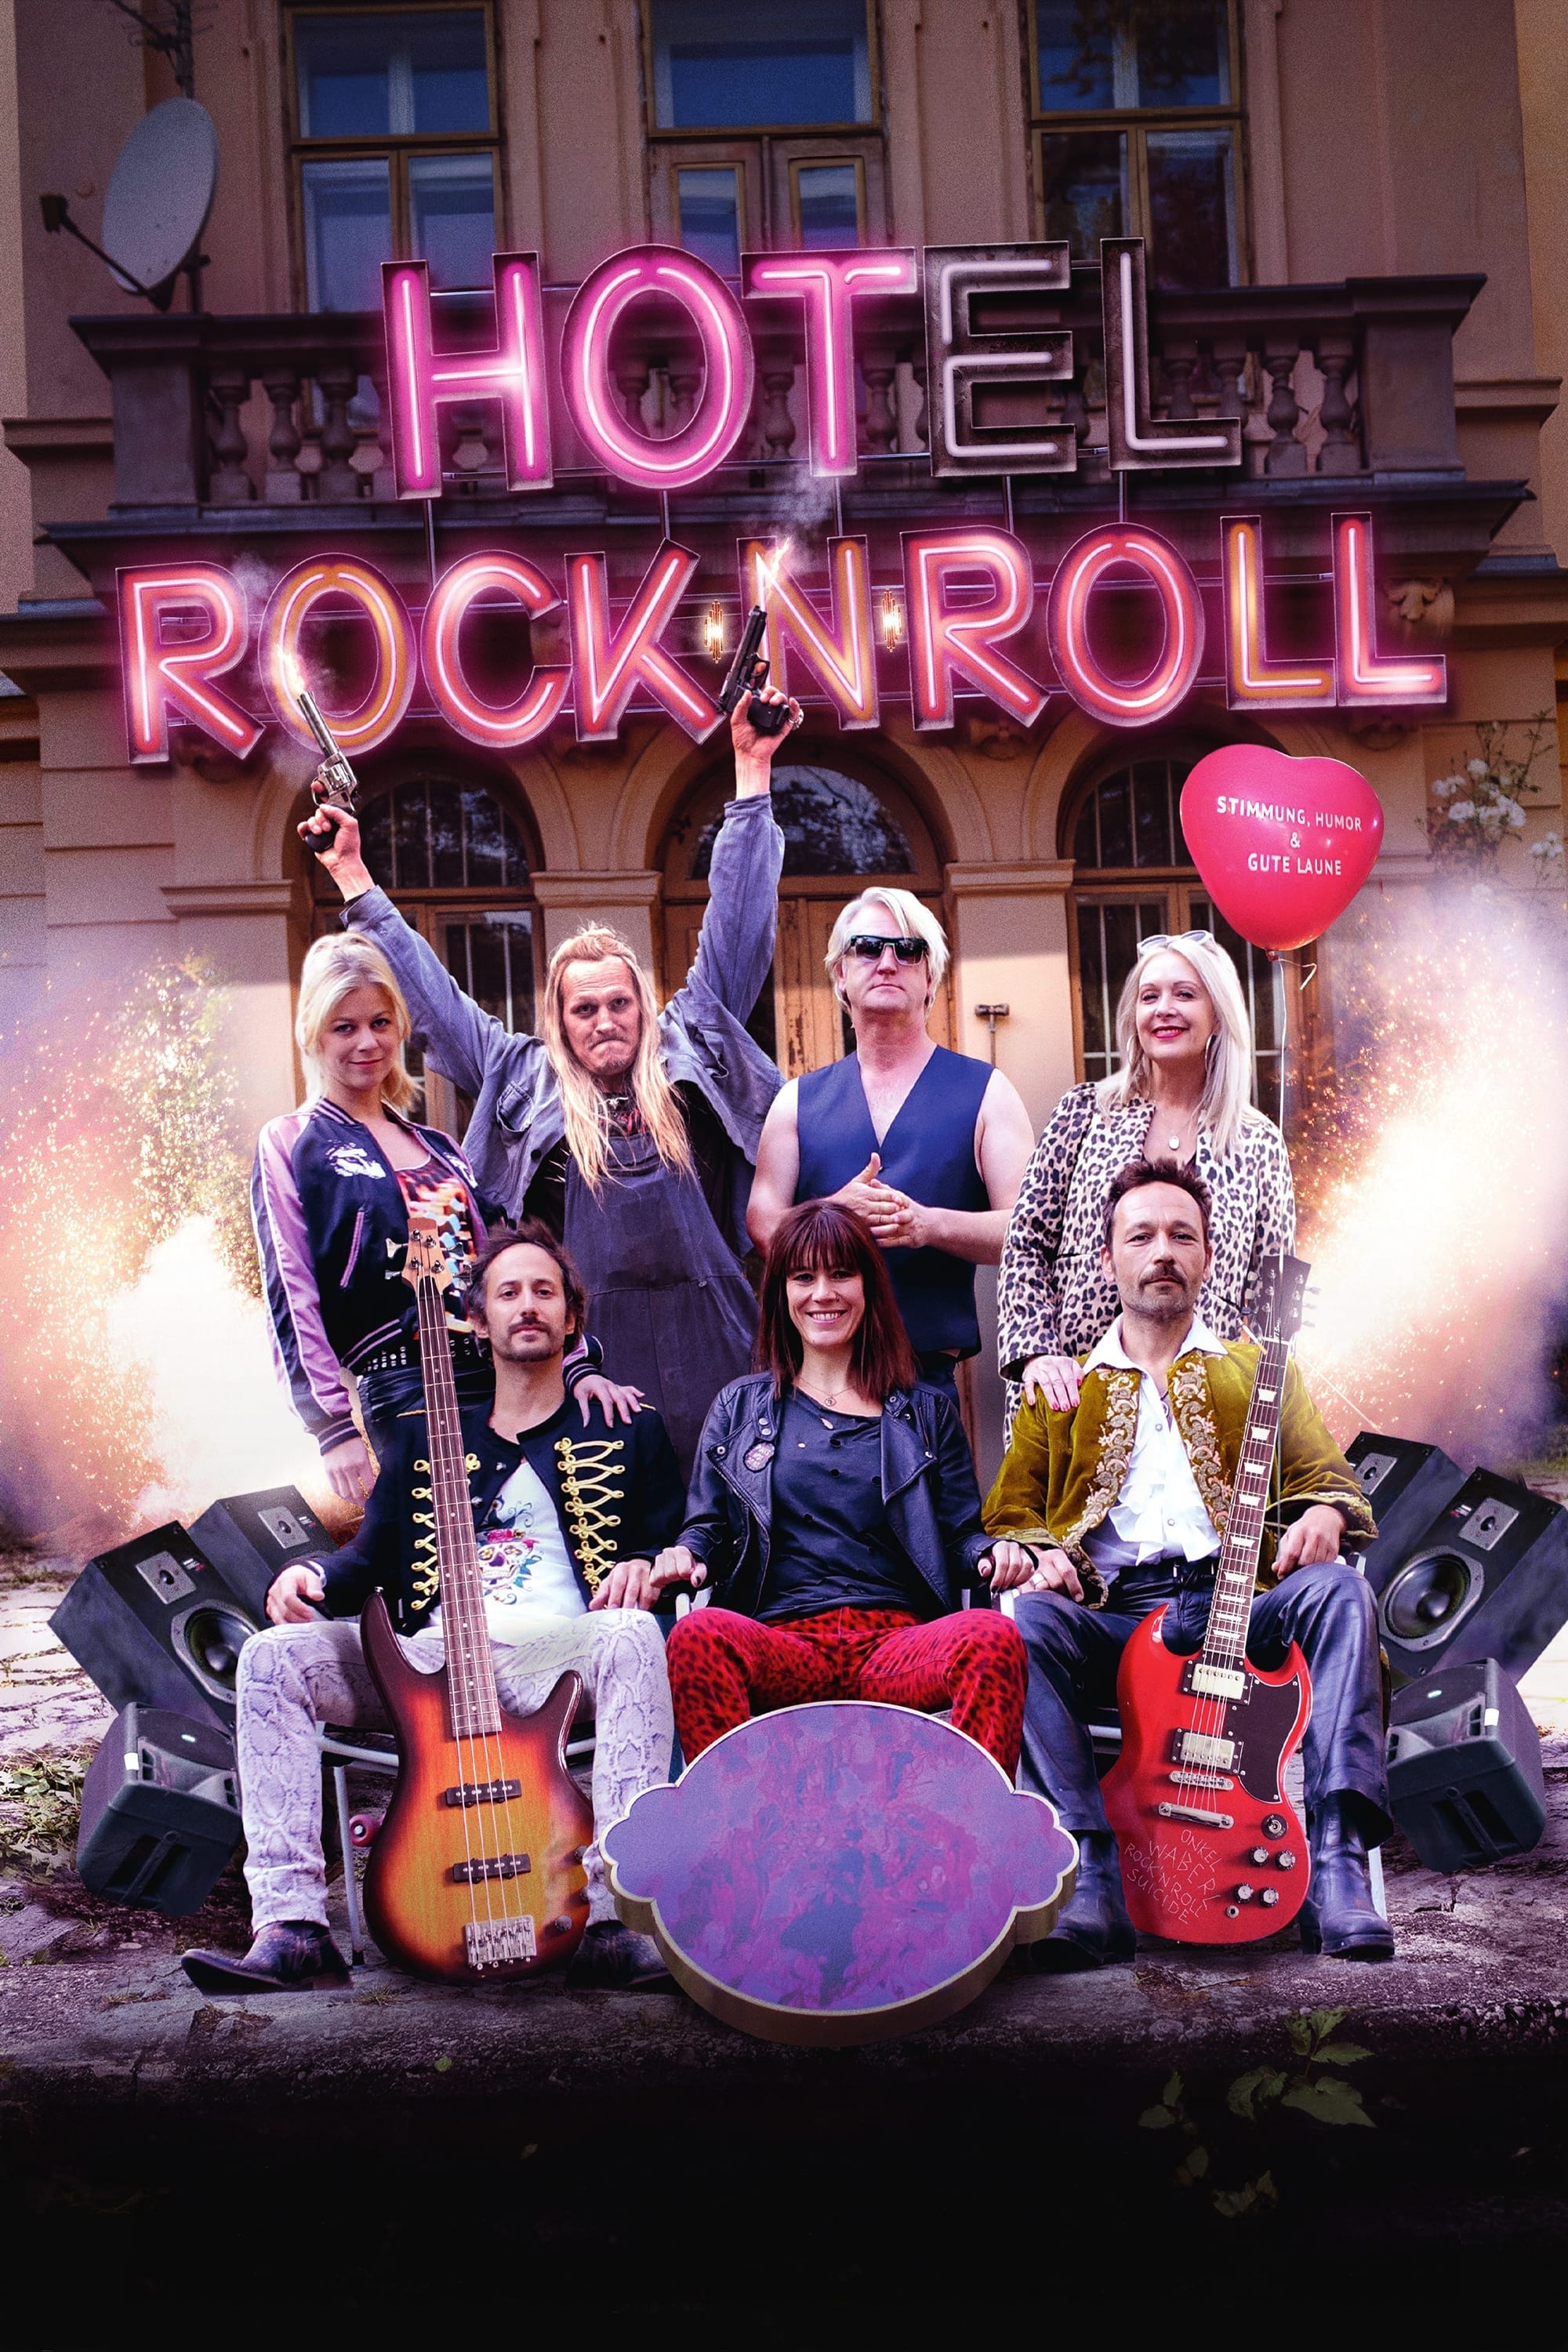 Hotel Rock'n'Roll